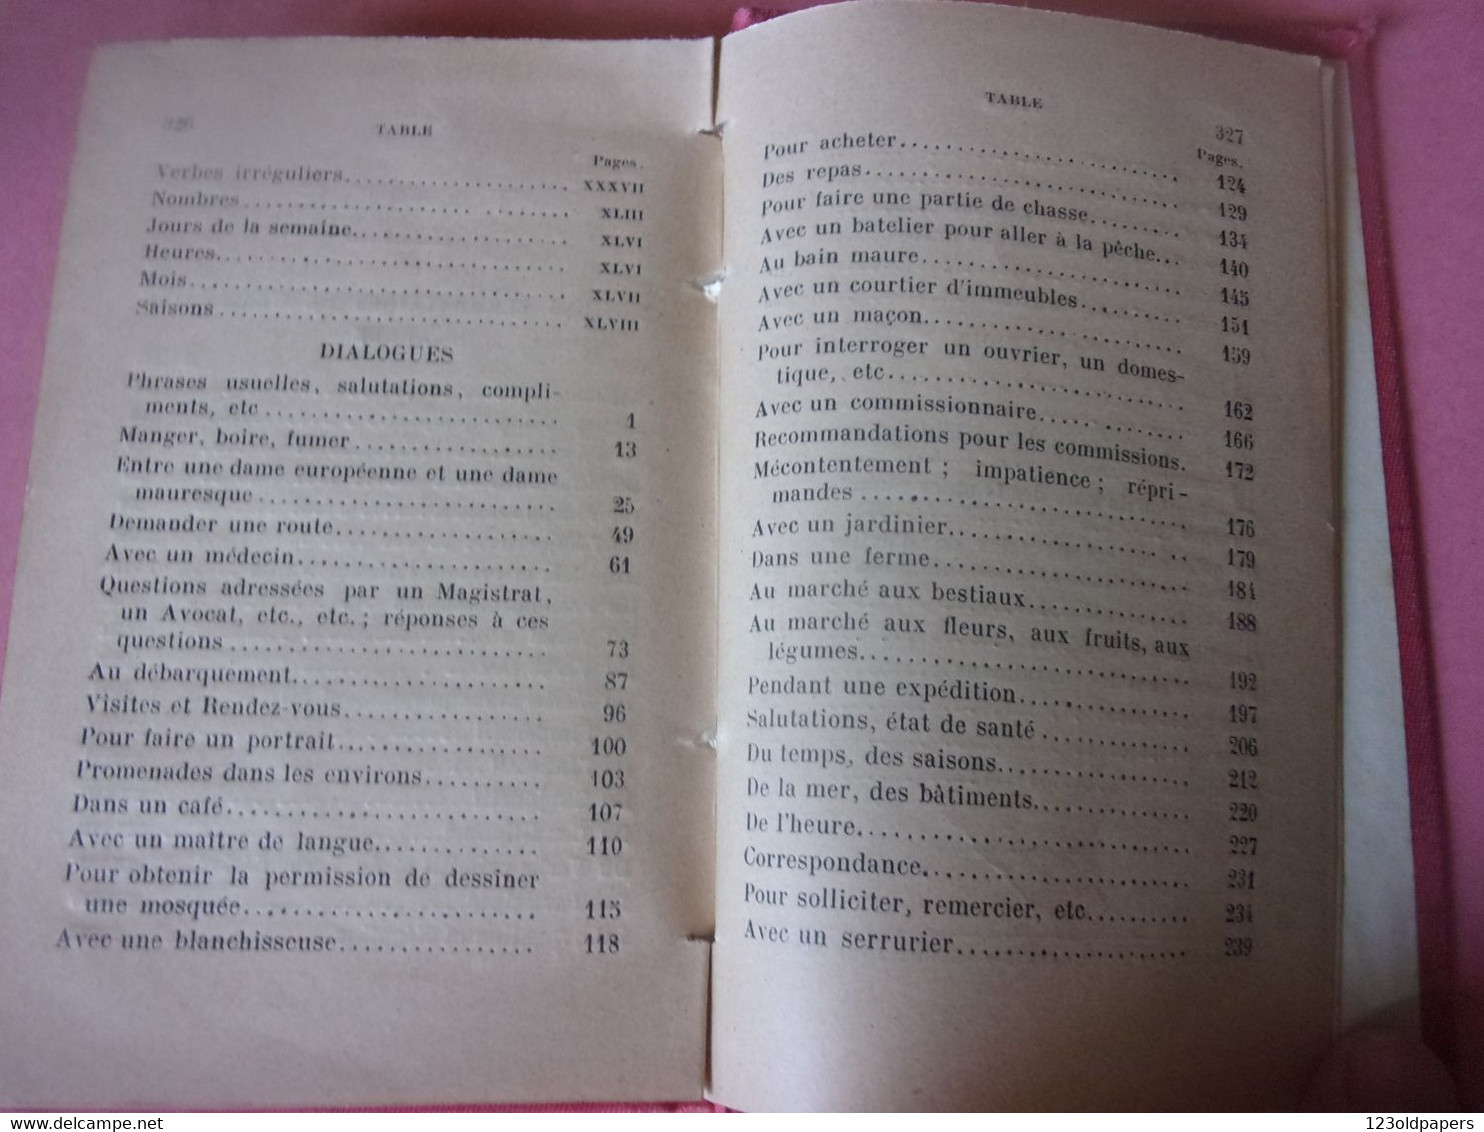 ♥️ 1905 DIALOGUES français-arabe par ben sedira bel kassem. jourdan, alger COLLECTION CARBONEL ALGERIE